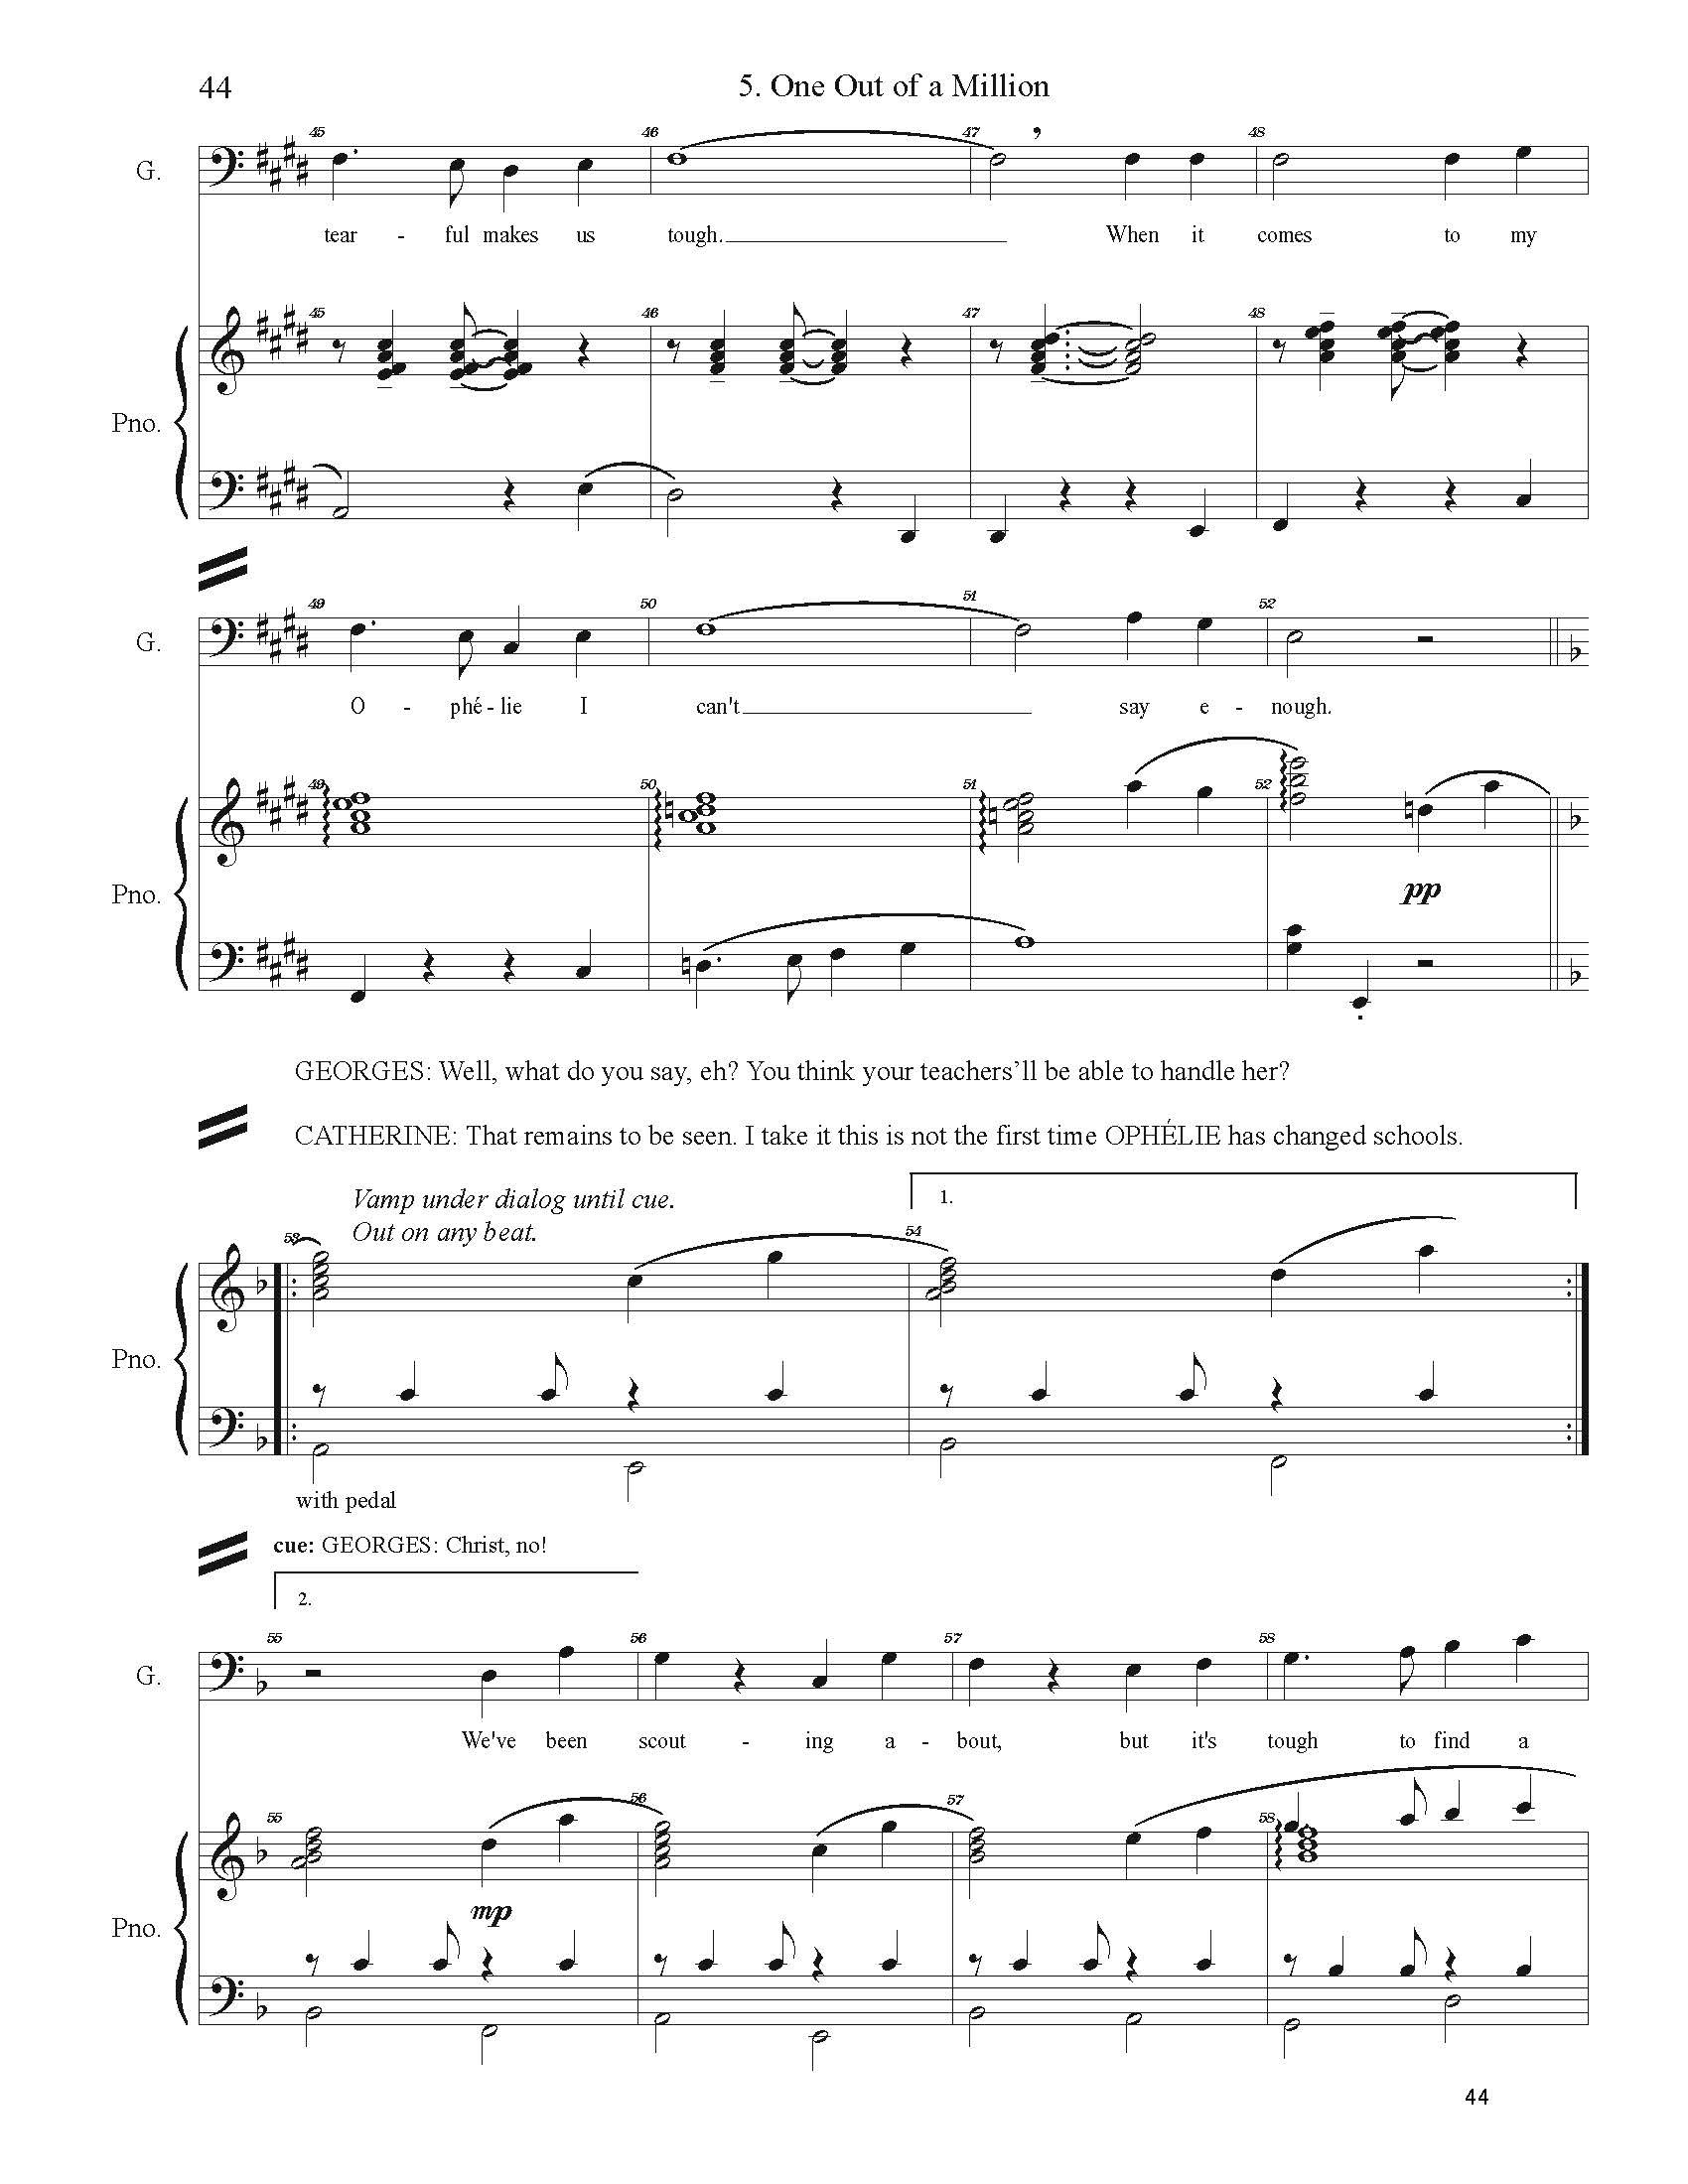 FULL PIANO VOCAL SCORE DRAFT 1 - Score_Page_044.jpg